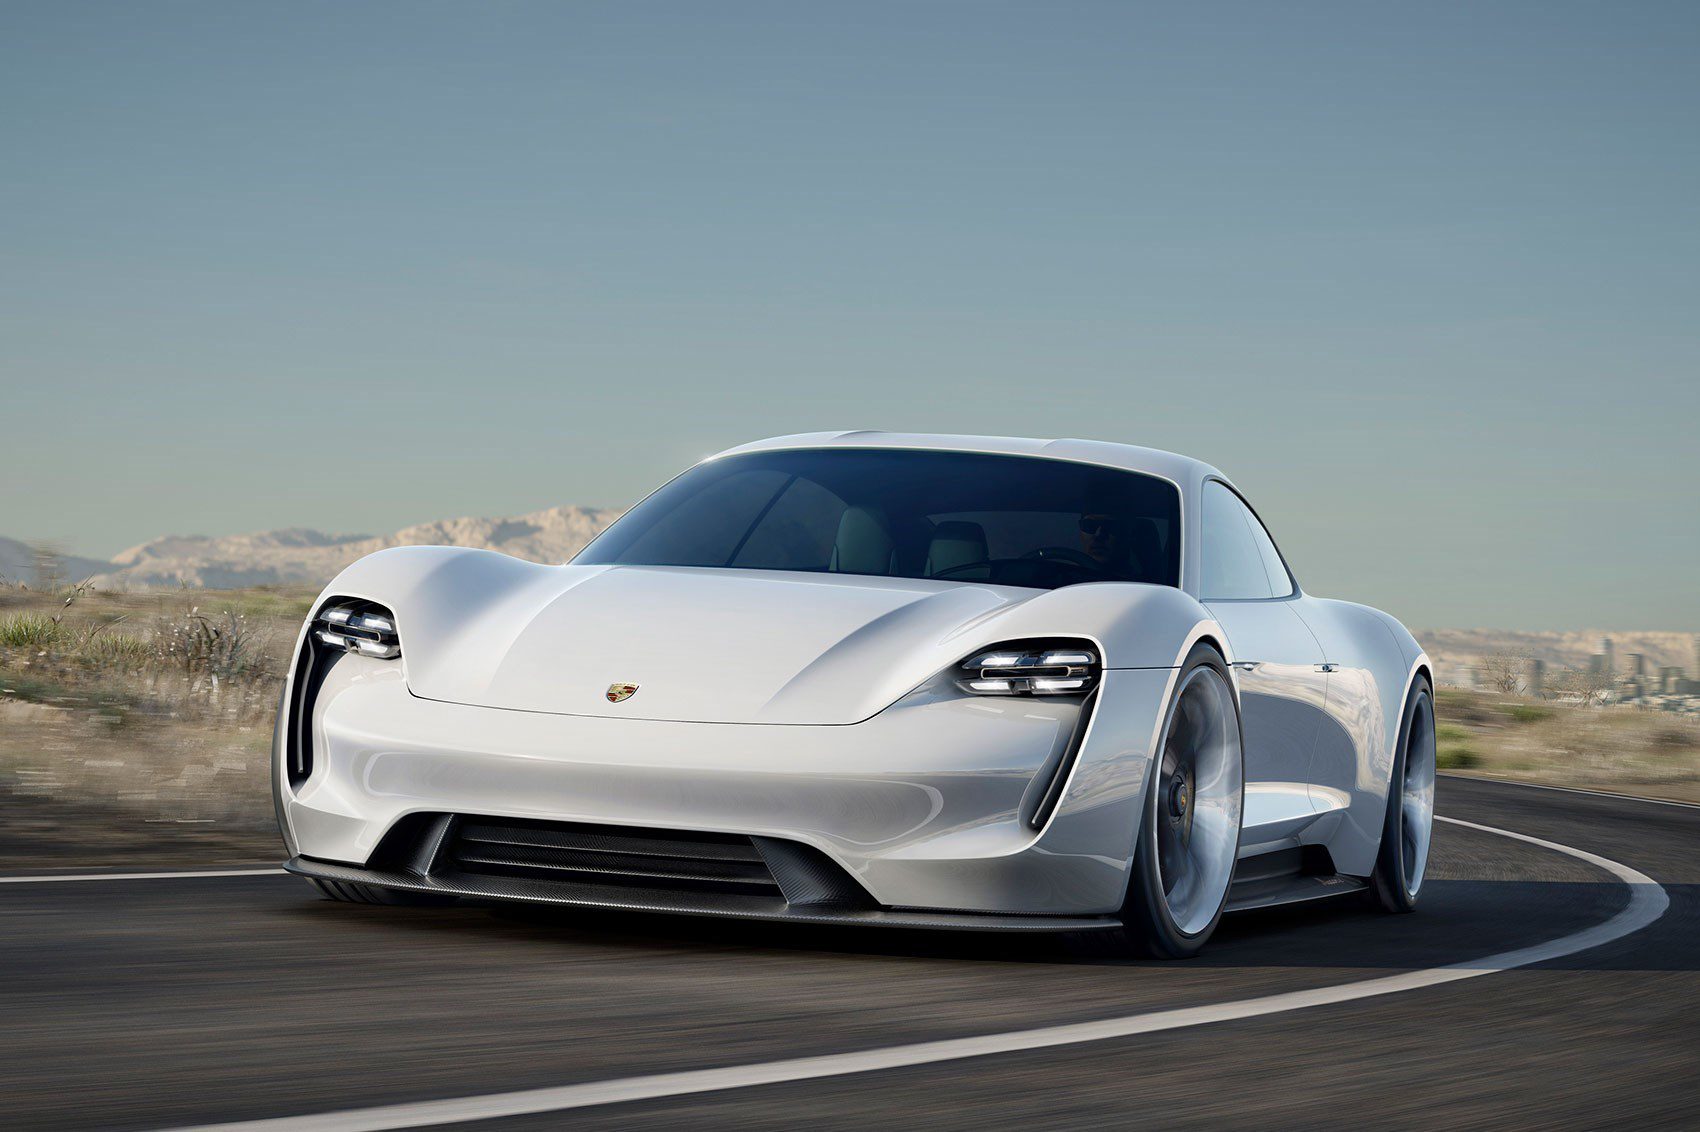 Porsche Taycan Electric Vehicle Best New Cars 2019